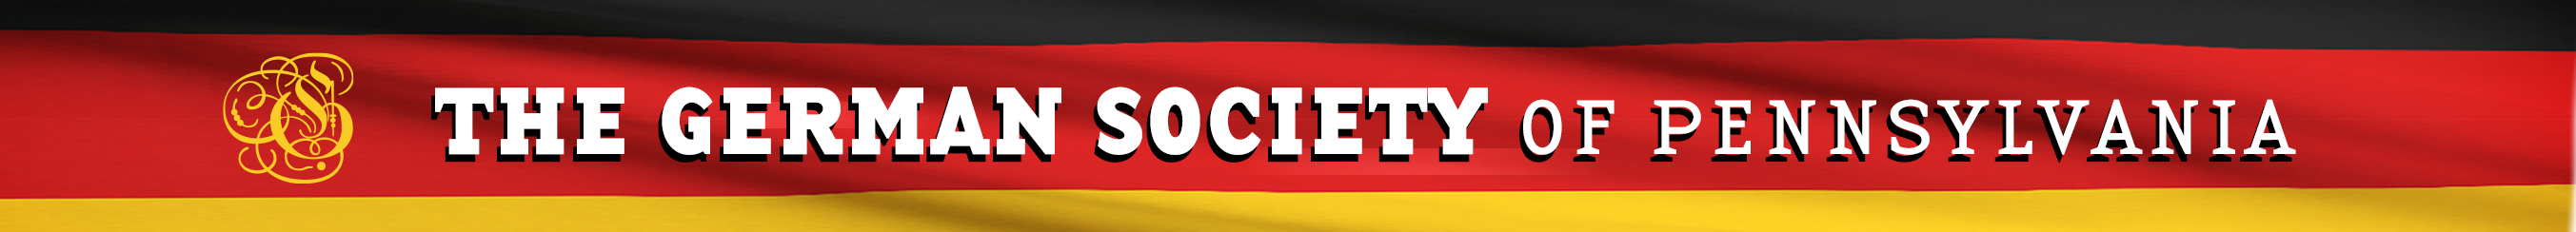 The German Society of Pennsylvania